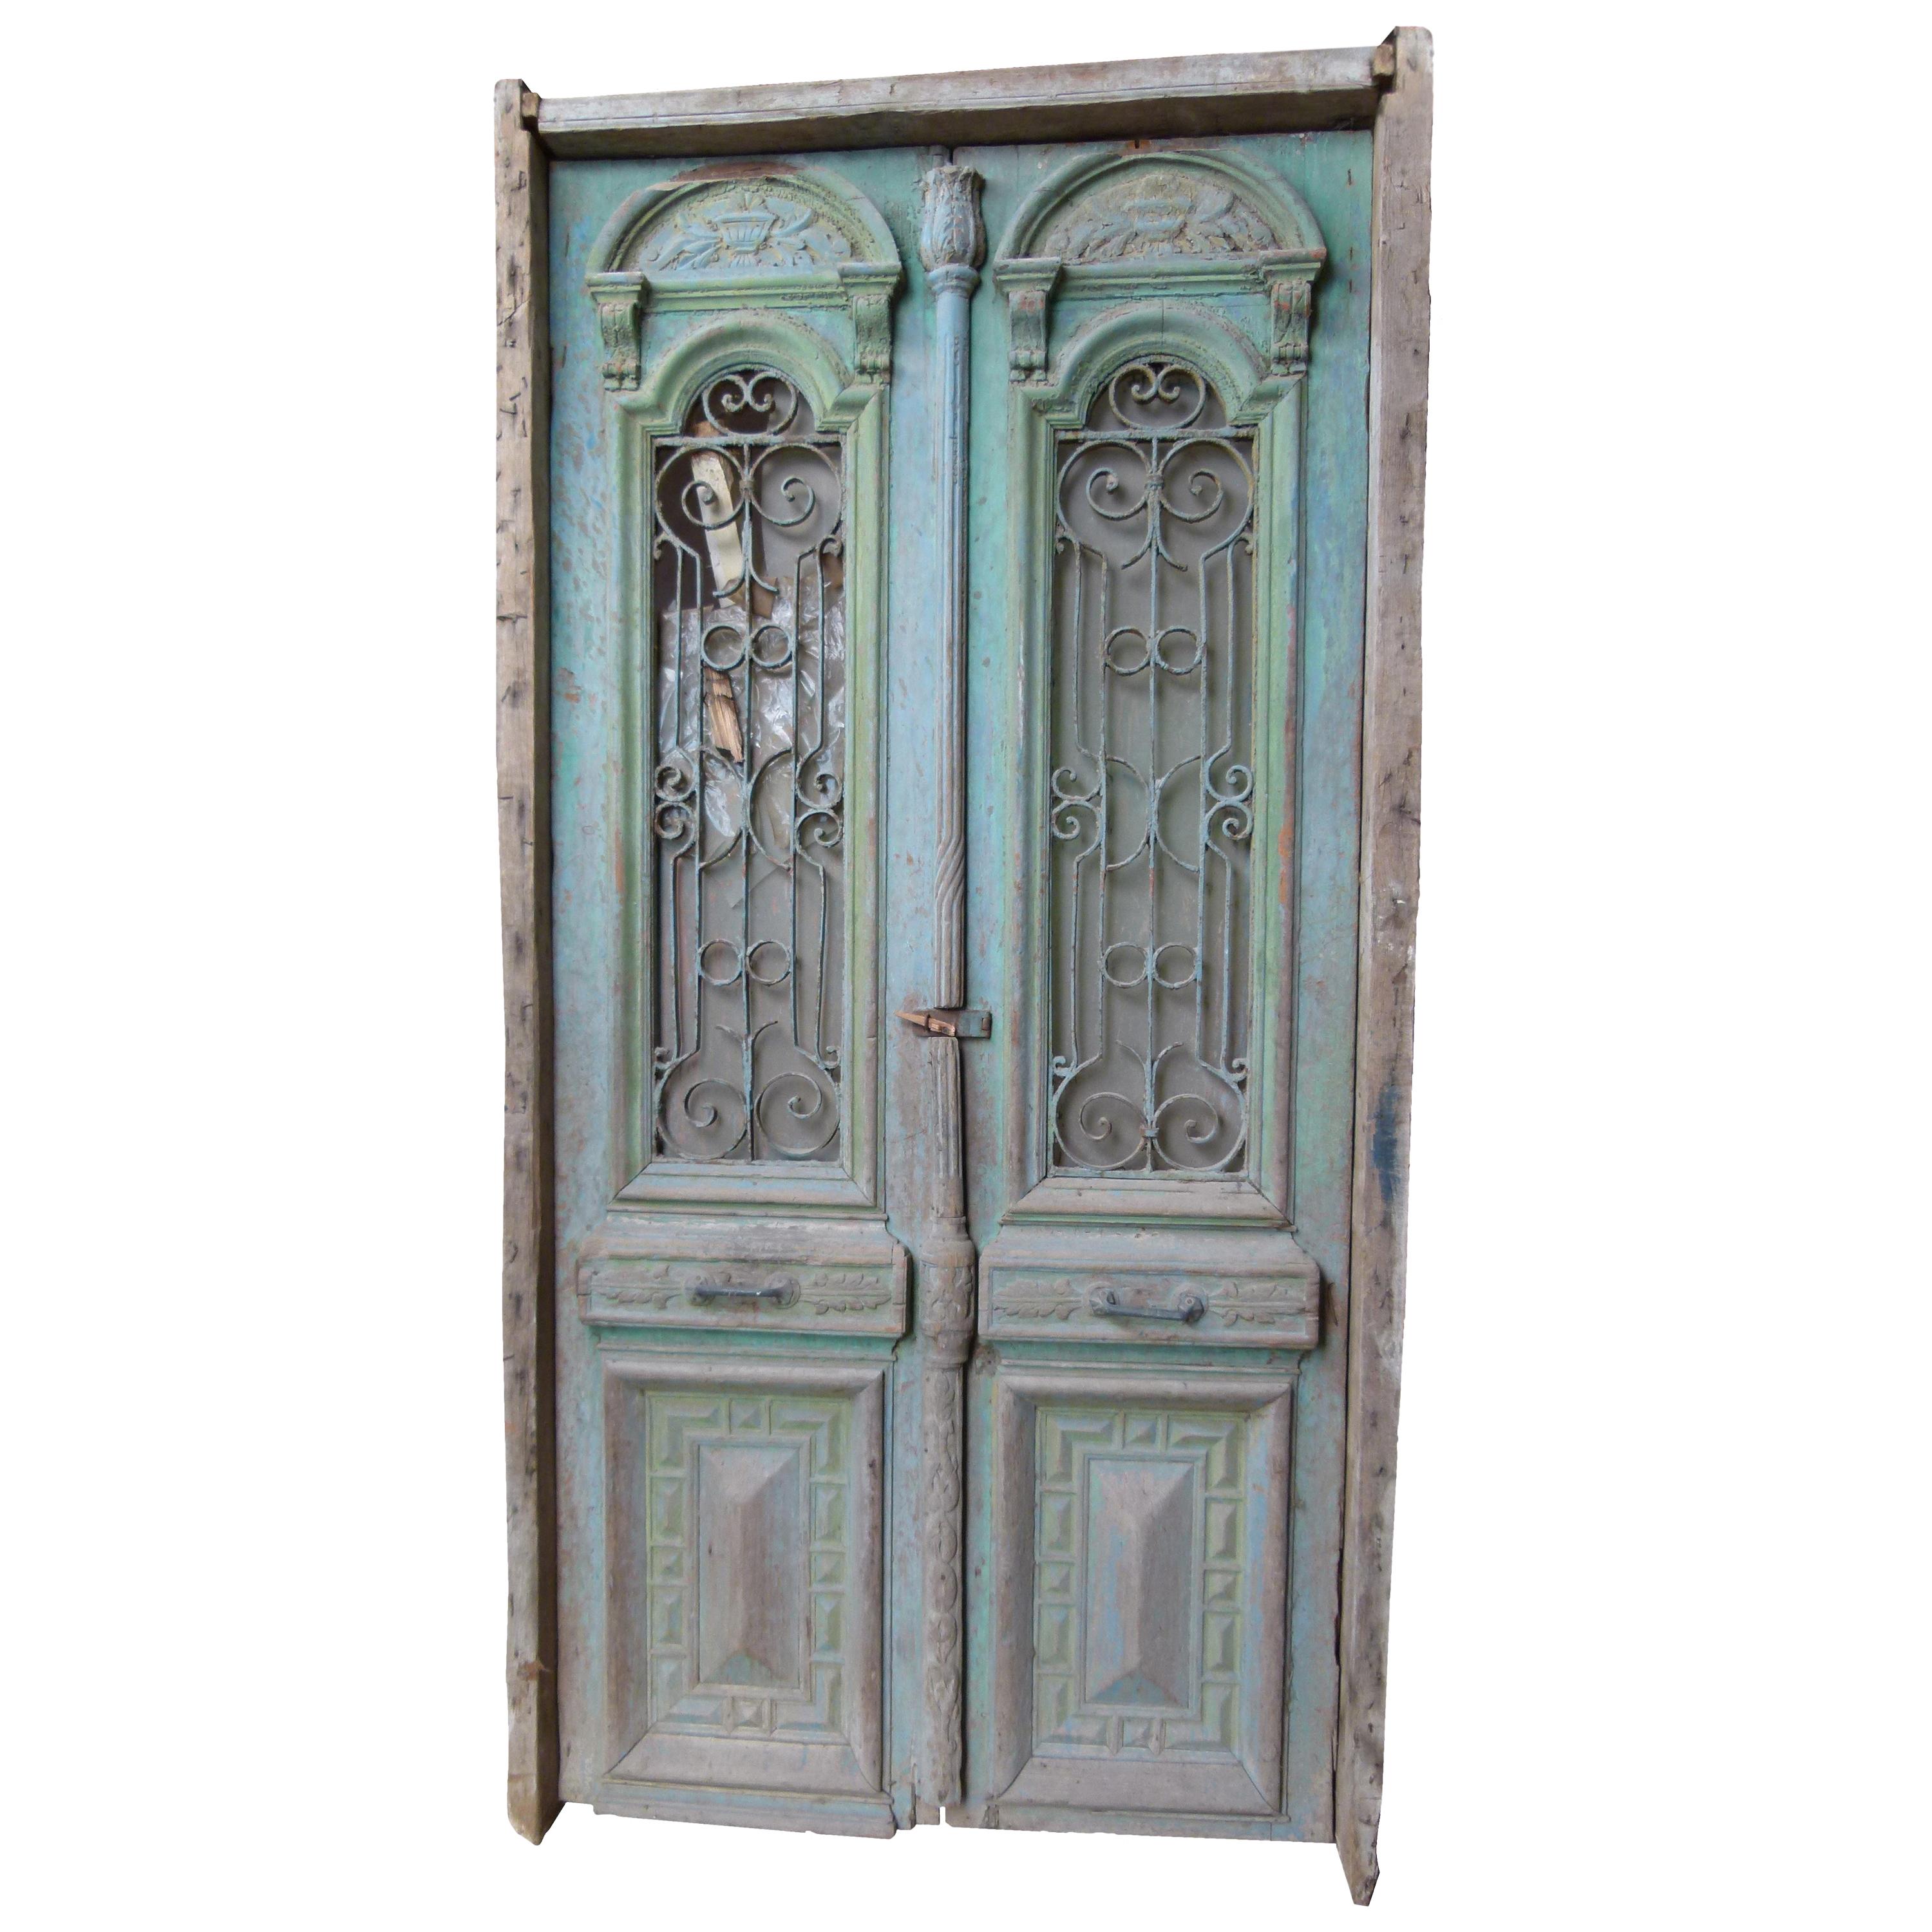 19th Century Wooden Double Front Door in Art Nouveau Style